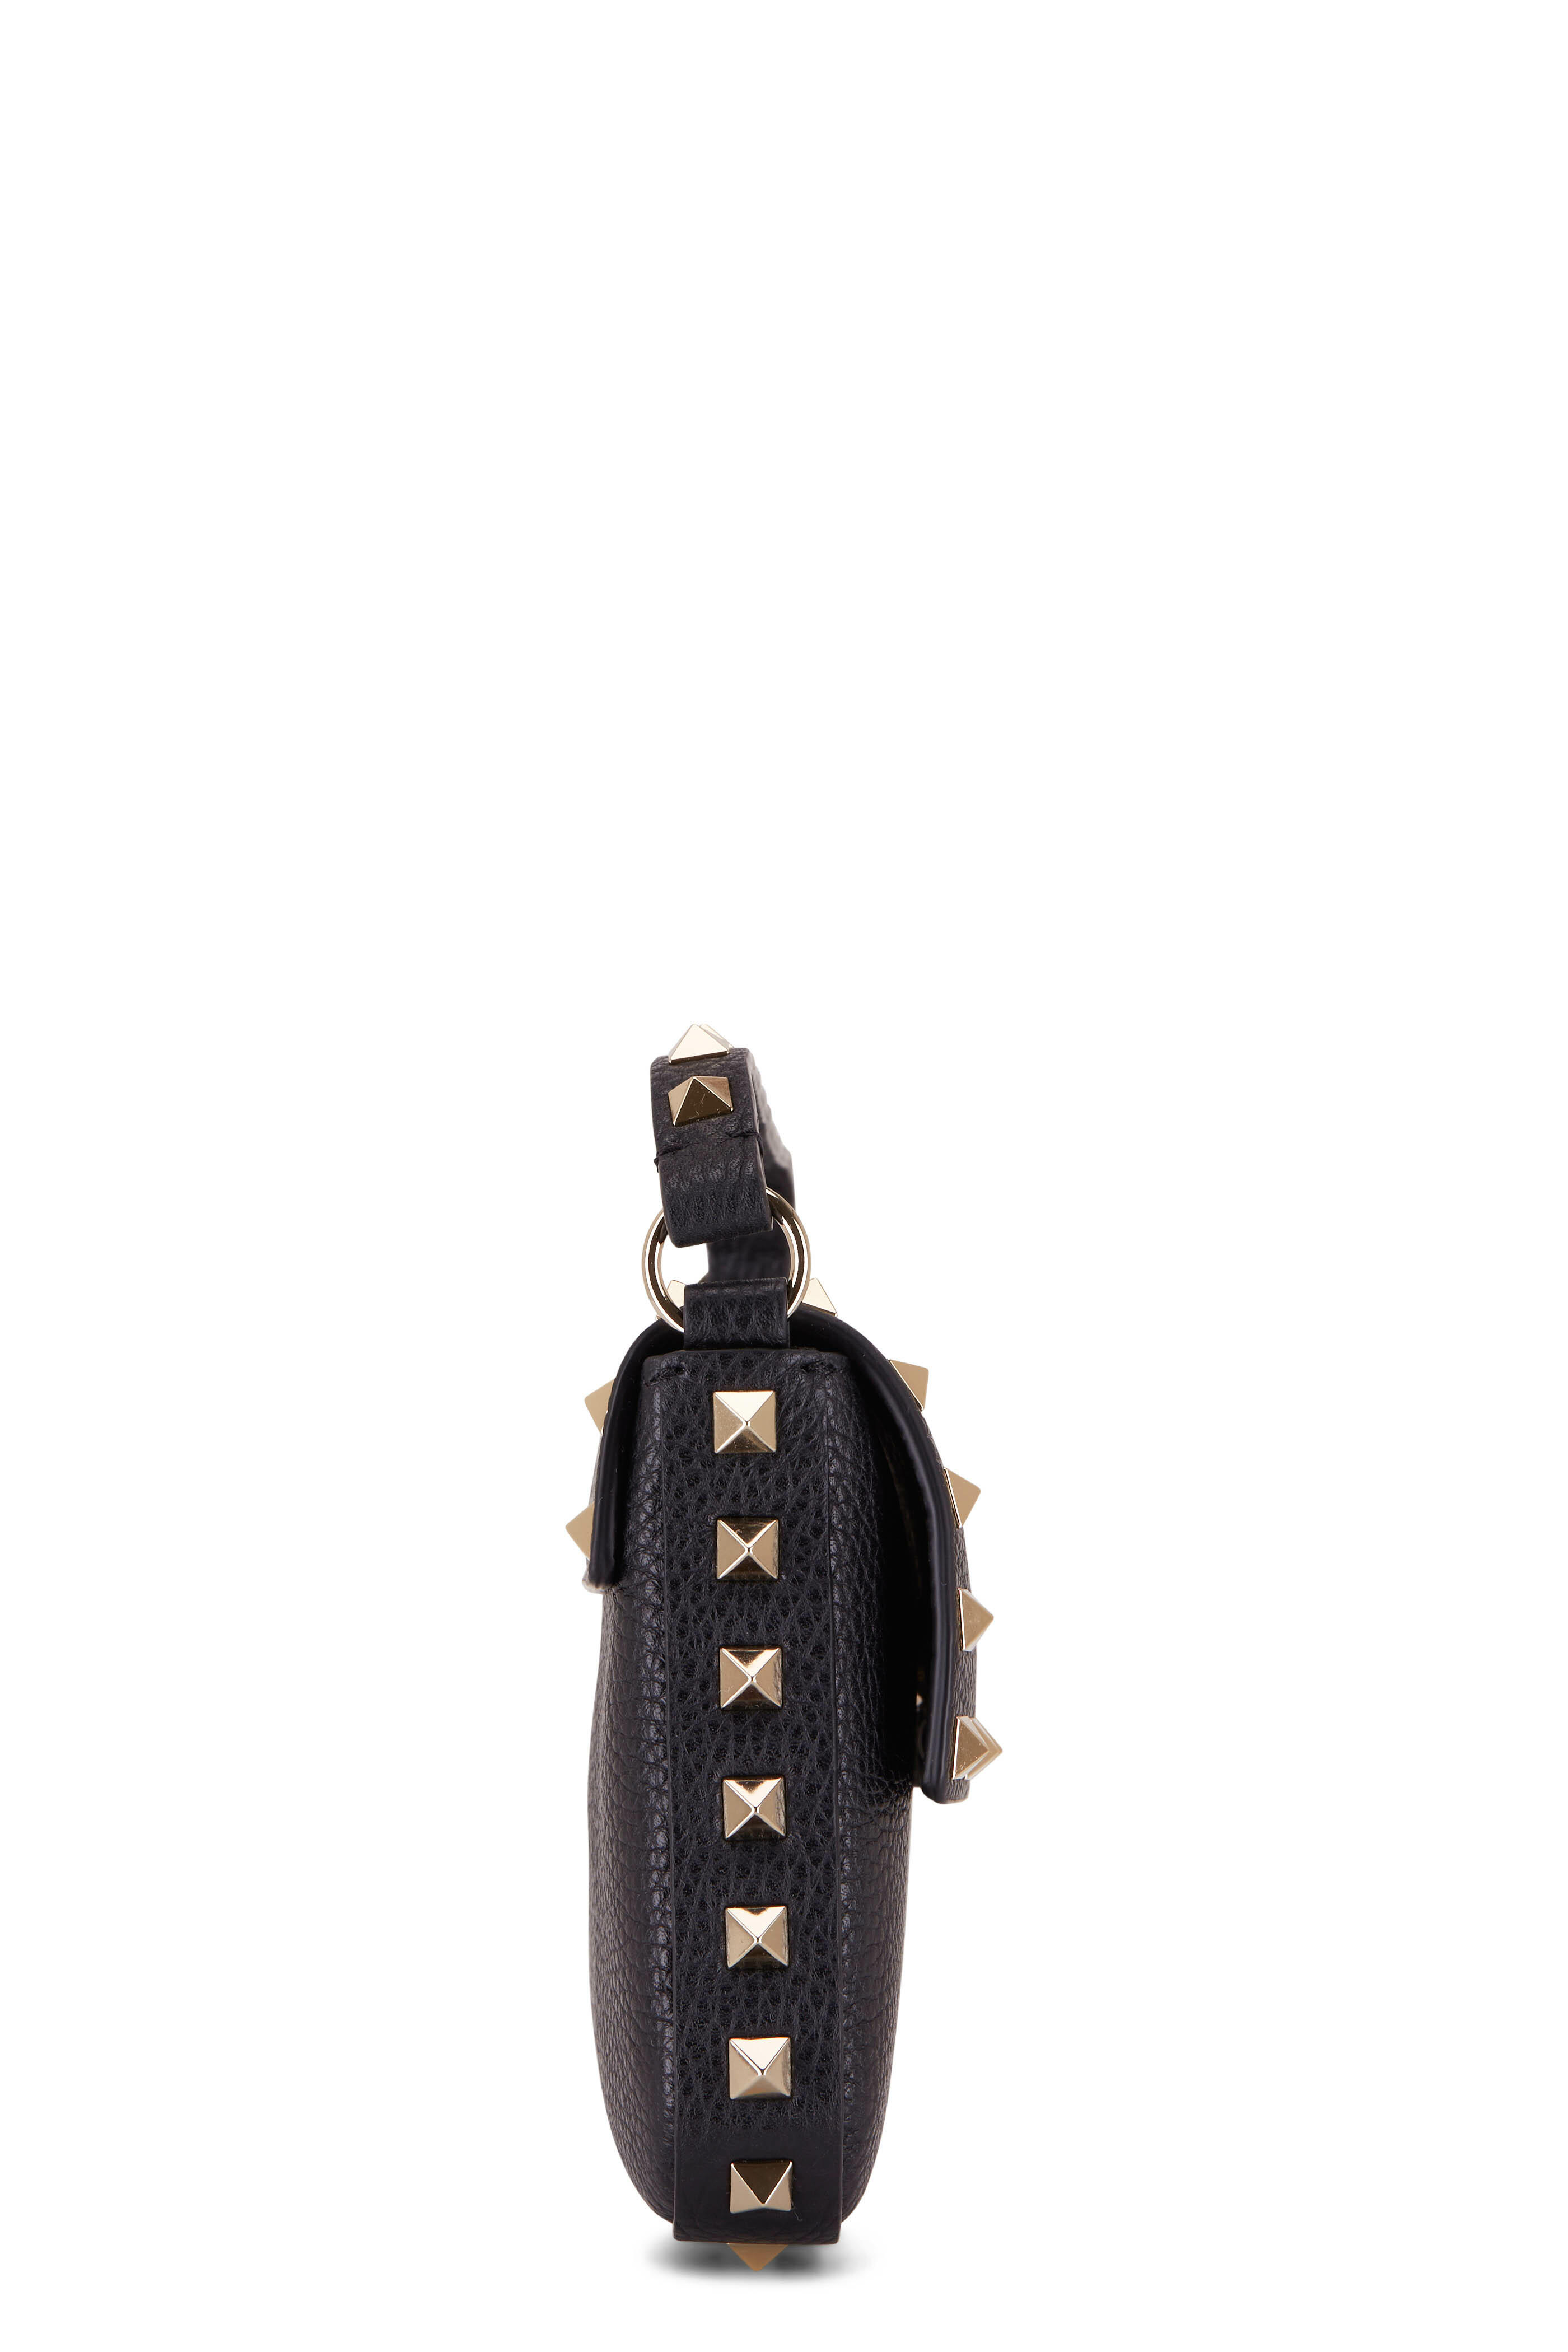 Valentino Garavani Men's Rockstud Black Leather Clutch Bag Wrist Strap –  AvaMaria